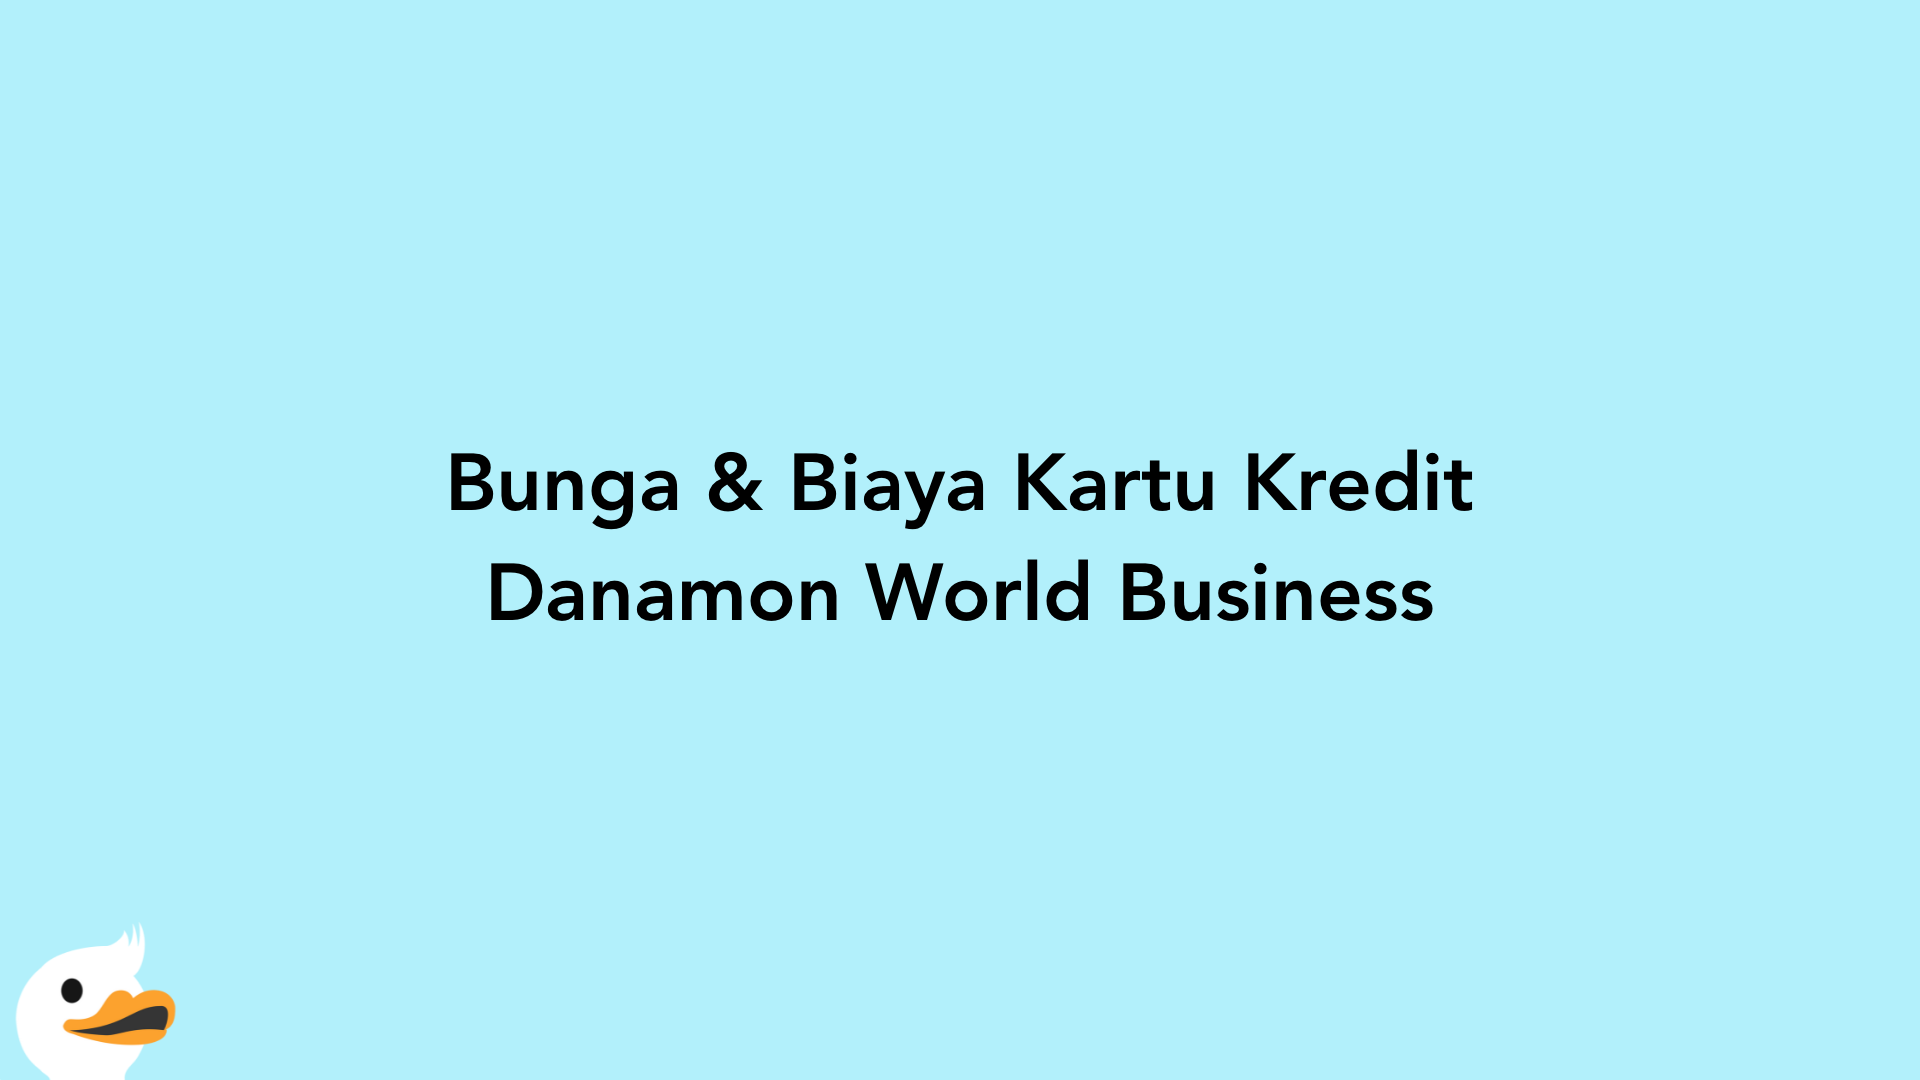 Bunga & Biaya Kartu Kredit Danamon World Business